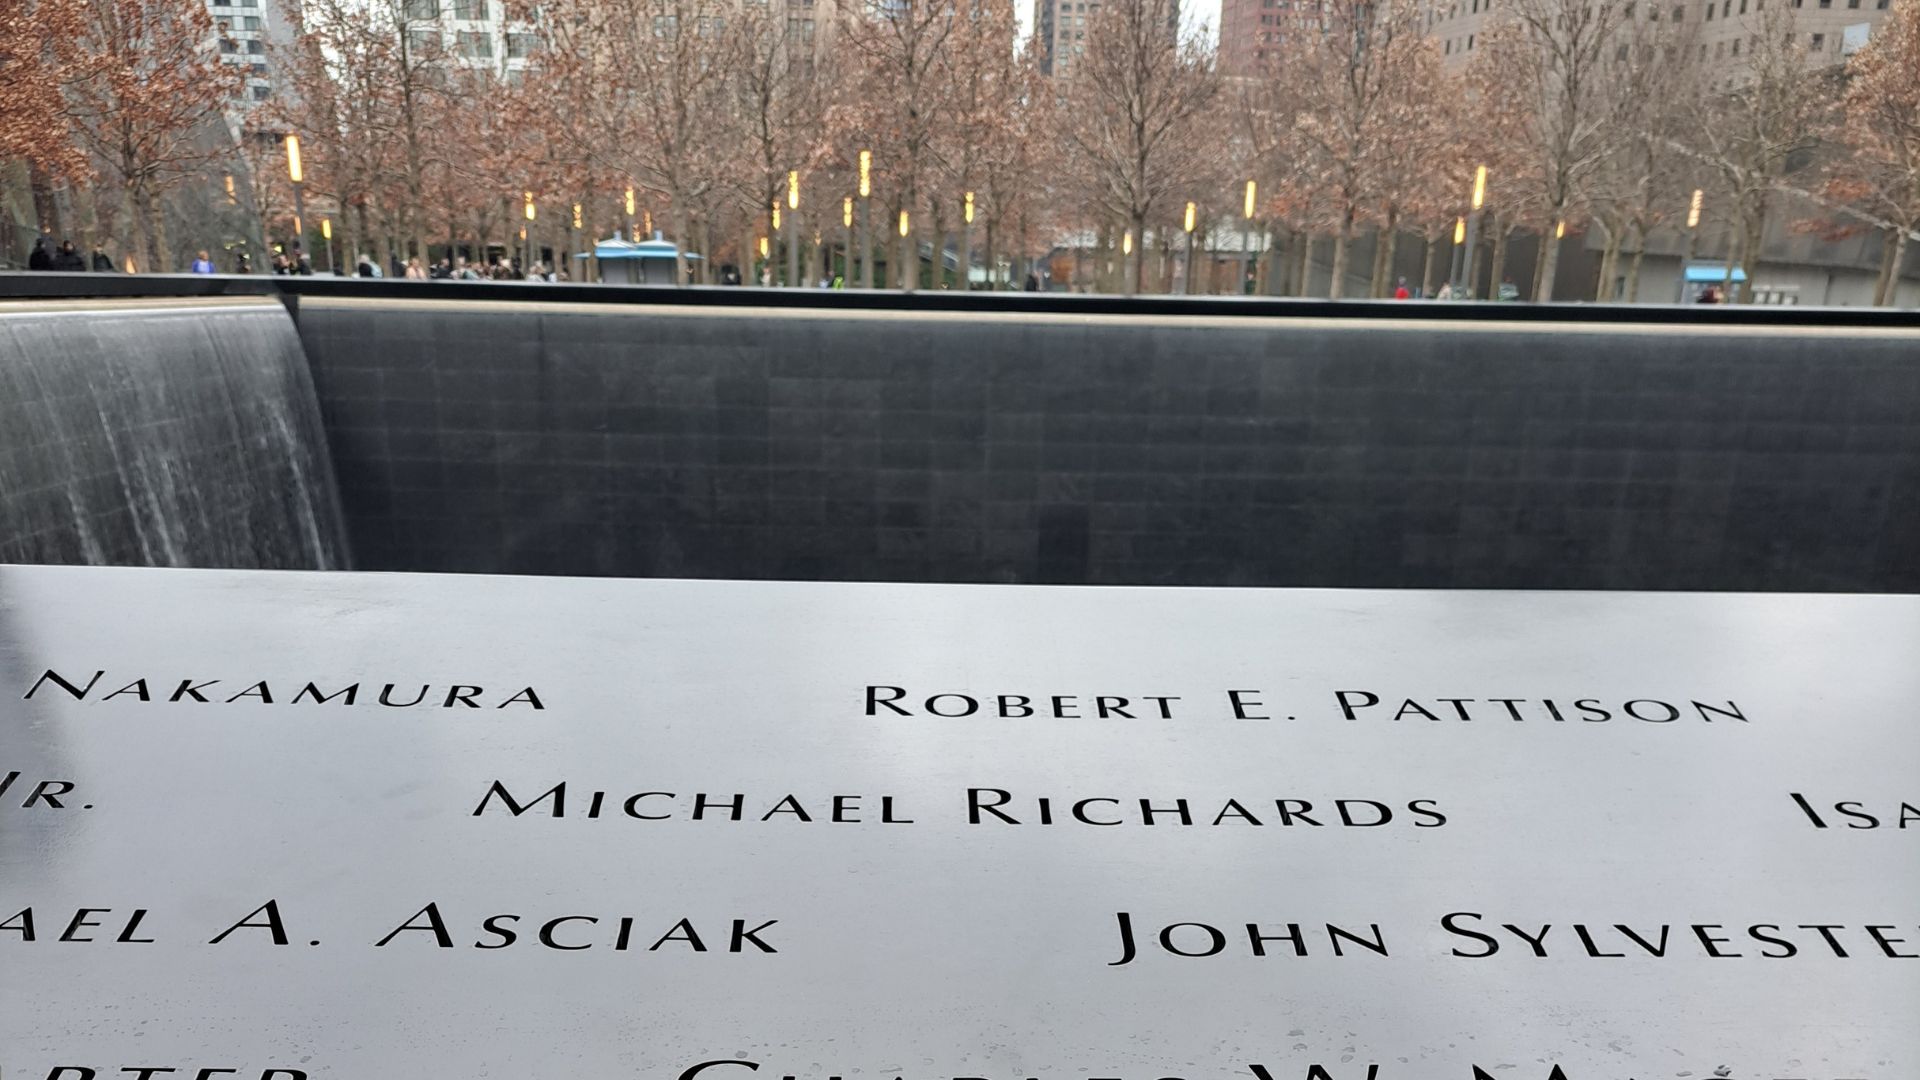 Michael Richards name engraved on the Memorial parapet